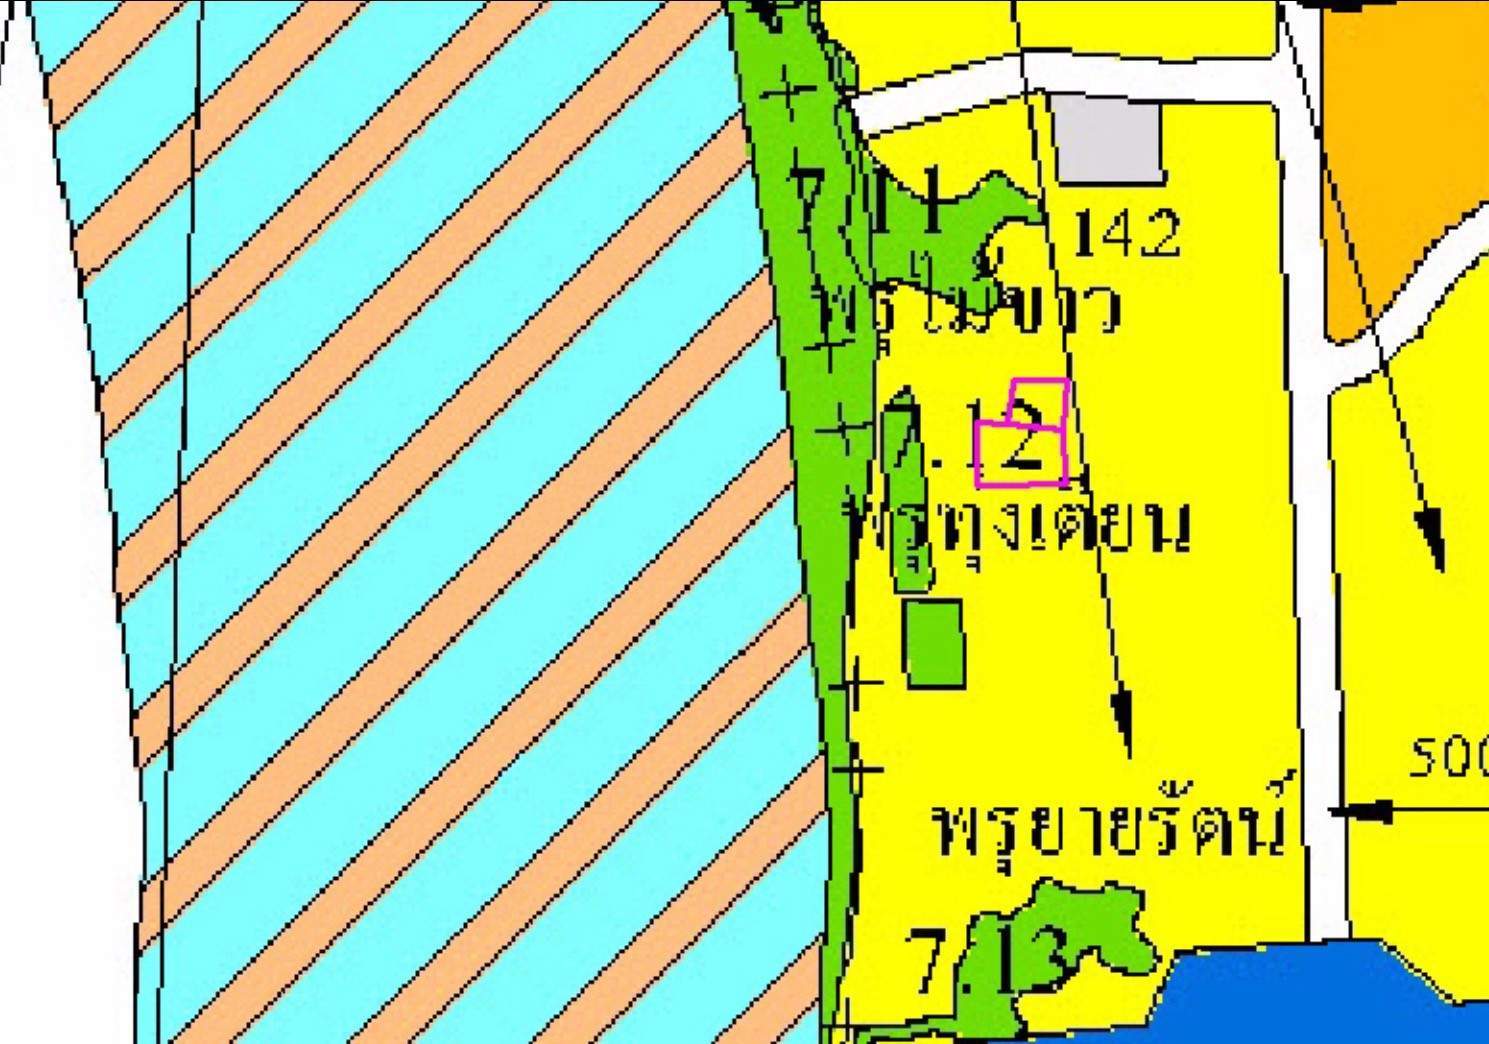 Land for Sale, Thailand, Phuket, Mai Khao | Villacarte